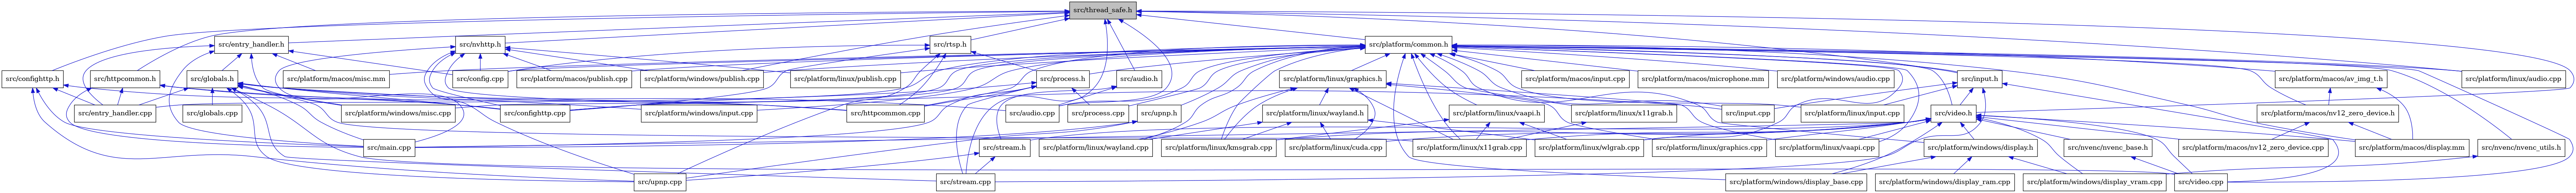 digraph {
    graph [bgcolor="#00000000"]
    node [shape=rectangle style=filled fillcolor="#FFFFFF" font=Helvetica padding=2]
    edge [color="#1414CE"]
    "56" [label="src/process.h" tooltip="src/process.h"]
    "34" [label="src/platform/windows/display.h" tooltip="src/platform/windows/display.h"]
    "45" [label="src/platform/linux/graphics.h" tooltip="src/platform/linux/graphics.h"]
    "4" [label="src/stream.h" tooltip="src/stream.h"]
    "10" [label="src/main.cpp" tooltip="src/main.cpp"]
    "21" [label="src/httpcommon.h" tooltip="src/httpcommon.h"]
    "43" [label="src/nvenc/nvenc_utils.h" tooltip="src/nvenc/nvenc_utils.h"]
    "17" [label="src/platform/windows/input.cpp" tooltip="src/platform/windows/input.cpp"]
    "37" [label="src/platform/windows/display_vram.cpp" tooltip="src/platform/windows/display_vram.cpp"]
    "32" [label="src/platform/macos/display.mm" tooltip="src/platform/macos/display.mm"]
    "50" [label="src/platform/macos/av_img_t.h" tooltip="src/platform/macos/av_img_t.h"]
    "23" [label="src/input.h" tooltip="src/input.h"]
    "29" [label="src/platform/linux/kmsgrab.cpp" tooltip="src/platform/linux/kmsgrab.cpp"]
    "15" [label="src/input.cpp" tooltip="src/input.cpp"]
    "9" [label="src/entry_handler.cpp" tooltip="src/entry_handler.cpp"]
    "52" [label="src/platform/macos/input.cpp" tooltip="src/platform/macos/input.cpp"]
    "55" [label="src/process.cpp" tooltip="src/process.cpp"]
    "30" [label="src/platform/linux/vaapi.cpp" tooltip="src/platform/linux/vaapi.cpp"]
    "20" [label="src/platform/macos/misc.mm" tooltip="src/platform/macos/misc.mm"]
    "13" [label="src/globals.h" tooltip="src/globals.h"]
    "39" [label="src/platform/linux/publish.cpp" tooltip="src/platform/linux/publish.cpp"]
    "47" [label="src/platform/linux/wayland.h" tooltip="src/platform/linux/wayland.h"]
    "12" [label="src/config.cpp" tooltip="src/config.cpp"]
    "25" [label="src/video.h" tooltip="src/video.h"]
    "6" [label="src/upnp.cpp" tooltip="src/upnp.cpp"]
    "18" [label="src/platform/windows/misc.cpp" tooltip="src/platform/windows/misc.cpp"]
    "1" [label="src/thread_safe.h" tooltip="src/thread_safe.h" fillcolor="#BFBFBF"]
    "53" [label="src/platform/macos/microphone.mm" tooltip="src/platform/macos/microphone.mm"]
    "7" [label="src/confighttp.h" tooltip="src/confighttp.h"]
    "57" [label="src/upnp.h" tooltip="src/upnp.h"]
    "31" [label="src/platform/linux/wlgrab.cpp" tooltip="src/platform/linux/wlgrab.cpp"]
    "33" [label="src/platform/macos/nv12_zero_device.cpp" tooltip="src/platform/macos/nv12_zero_device.cpp"]
    "36" [label="src/platform/windows/display_ram.cpp" tooltip="src/platform/windows/display_ram.cpp"]
    "38" [label="src/nvhttp.h" tooltip="src/nvhttp.h"]
    "8" [label="src/confighttp.cpp" tooltip="src/confighttp.cpp"]
    "40" [label="src/platform/macos/publish.cpp" tooltip="src/platform/macos/publish.cpp"]
    "49" [label="src/platform/linux/x11grab.h" tooltip="src/platform/linux/x11grab.h"]
    "48" [label="src/platform/linux/vaapi.h" tooltip="src/platform/linux/vaapi.h"]
    "35" [label="src/platform/windows/display_base.cpp" tooltip="src/platform/windows/display_base.cpp"]
    "19" [label="src/video.cpp" tooltip="src/video.cpp"]
    "54" [label="src/platform/windows/audio.cpp" tooltip="src/platform/windows/audio.cpp"]
    "24" [label="src/platform/linux/input.cpp" tooltip="src/platform/linux/input.cpp"]
    "41" [label="src/platform/windows/publish.cpp" tooltip="src/platform/windows/publish.cpp"]
    "42" [label="src/platform/common.h" tooltip="src/platform/common.h"]
    "14" [label="src/globals.cpp" tooltip="src/globals.cpp"]
    "46" [label="src/platform/linux/wayland.cpp" tooltip="src/platform/linux/wayland.cpp"]
    "26" [label="src/nvenc/nvenc_base.h" tooltip="src/nvenc/nvenc_base.h"]
    "22" [label="src/httpcommon.cpp" tooltip="src/httpcommon.cpp"]
    "11" [label="src/entry_handler.h" tooltip="src/entry_handler.h"]
    "27" [label="src/platform/linux/cuda.cpp" tooltip="src/platform/linux/cuda.cpp"]
    "2" [label="src/audio.h" tooltip="src/audio.h"]
    "3" [label="src/audio.cpp" tooltip="src/audio.cpp"]
    "51" [label="src/platform/macos/nv12_zero_device.h" tooltip="src/platform/macos/nv12_zero_device.h"]
    "5" [label="src/stream.cpp" tooltip="src/stream.cpp"]
    "28" [label="src/platform/linux/graphics.cpp" tooltip="src/platform/linux/graphics.cpp"]
    "16" [label="src/platform/linux/x11grab.cpp" tooltip="src/platform/linux/x11grab.cpp"]
    "58" [label="src/rtsp.h" tooltip="src/rtsp.h"]
    "44" [label="src/platform/linux/audio.cpp" tooltip="src/platform/linux/audio.cpp"]
    "56" -> "8" [dir=back tooltip="include"]
    "56" -> "22" [dir=back tooltip="include"]
    "56" -> "10" [dir=back tooltip="include"]
    "56" -> "55" [dir=back tooltip="include"]
    "56" -> "5" [dir=back tooltip="include"]
    "34" -> "35" [dir=back tooltip="include"]
    "34" -> "36" [dir=back tooltip="include"]
    "34" -> "37" [dir=back tooltip="include"]
    "45" -> "27" [dir=back tooltip="include"]
    "45" -> "28" [dir=back tooltip="include"]
    "45" -> "29" [dir=back tooltip="include"]
    "45" -> "30" [dir=back tooltip="include"]
    "45" -> "46" [dir=back tooltip="include"]
    "45" -> "47" [dir=back tooltip="include"]
    "45" -> "16" [dir=back tooltip="include"]
    "4" -> "5" [dir=back tooltip="include"]
    "4" -> "6" [dir=back tooltip="include"]
    "21" -> "8" [dir=back tooltip="include"]
    "21" -> "9" [dir=back tooltip="include"]
    "21" -> "22" [dir=back tooltip="include"]
    "21" -> "10" [dir=back tooltip="include"]
    "43" -> "37" [dir=back tooltip="include"]
    "50" -> "32" [dir=back tooltip="include"]
    "50" -> "51" [dir=back tooltip="include"]
    "23" -> "15" [dir=back tooltip="include"]
    "23" -> "24" [dir=back tooltip="include"]
    "23" -> "5" [dir=back tooltip="include"]
    "23" -> "25" [dir=back tooltip="include"]
    "23" -> "19" [dir=back tooltip="include"]
    "13" -> "3" [dir=back tooltip="include"]
    "13" -> "8" [dir=back tooltip="include"]
    "13" -> "9" [dir=back tooltip="include"]
    "13" -> "14" [dir=back tooltip="include"]
    "13" -> "10" [dir=back tooltip="include"]
    "13" -> "15" [dir=back tooltip="include"]
    "13" -> "16" [dir=back tooltip="include"]
    "13" -> "17" [dir=back tooltip="include"]
    "13" -> "18" [dir=back tooltip="include"]
    "13" -> "5" [dir=back tooltip="include"]
    "13" -> "6" [dir=back tooltip="include"]
    "13" -> "19" [dir=back tooltip="include"]
    "47" -> "27" [dir=back tooltip="include"]
    "47" -> "29" [dir=back tooltip="include"]
    "47" -> "46" [dir=back tooltip="include"]
    "47" -> "31" [dir=back tooltip="include"]
    "25" -> "10" [dir=back tooltip="include"]
    "25" -> "26" [dir=back tooltip="include"]
    "25" -> "27" [dir=back tooltip="include"]
    "25" -> "28" [dir=back tooltip="include"]
    "25" -> "29" [dir=back tooltip="include"]
    "25" -> "30" [dir=back tooltip="include"]
    "25" -> "31" [dir=back tooltip="include"]
    "25" -> "16" [dir=back tooltip="include"]
    "25" -> "32" [dir=back tooltip="include"]
    "25" -> "33" [dir=back tooltip="include"]
    "25" -> "34" [dir=back tooltip="include"]
    "25" -> "35" [dir=back tooltip="include"]
    "25" -> "37" [dir=back tooltip="include"]
    "25" -> "4" [dir=back tooltip="include"]
    "25" -> "19" [dir=back tooltip="include"]
    "1" -> "2" [dir=back tooltip="include"]
    "1" -> "3" [dir=back tooltip="include"]
    "1" -> "7" [dir=back tooltip="include"]
    "1" -> "11" [dir=back tooltip="include"]
    "1" -> "21" [dir=back tooltip="include"]
    "1" -> "23" [dir=back tooltip="include"]
    "1" -> "38" [dir=back tooltip="include"]
    "1" -> "42" [dir=back tooltip="include"]
    "1" -> "44" [dir=back tooltip="include"]
    "1" -> "41" [dir=back tooltip="include"]
    "1" -> "58" [dir=back tooltip="include"]
    "1" -> "5" [dir=back tooltip="include"]
    "1" -> "25" [dir=back tooltip="include"]
    "7" -> "8" [dir=back tooltip="include"]
    "7" -> "9" [dir=back tooltip="include"]
    "7" -> "10" [dir=back tooltip="include"]
    "7" -> "6" [dir=back tooltip="include"]
    "57" -> "10" [dir=back tooltip="include"]
    "57" -> "6" [dir=back tooltip="include"]
    "38" -> "12" [dir=back tooltip="include"]
    "38" -> "8" [dir=back tooltip="include"]
    "38" -> "22" [dir=back tooltip="include"]
    "38" -> "10" [dir=back tooltip="include"]
    "38" -> "39" [dir=back tooltip="include"]
    "38" -> "40" [dir=back tooltip="include"]
    "38" -> "41" [dir=back tooltip="include"]
    "38" -> "6" [dir=back tooltip="include"]
    "49" -> "16" [dir=back tooltip="include"]
    "48" -> "29" [dir=back tooltip="include"]
    "48" -> "31" [dir=back tooltip="include"]
    "48" -> "16" [dir=back tooltip="include"]
    "42" -> "3" [dir=back tooltip="include"]
    "42" -> "12" [dir=back tooltip="include"]
    "42" -> "8" [dir=back tooltip="include"]
    "42" -> "9" [dir=back tooltip="include"]
    "42" -> "22" [dir=back tooltip="include"]
    "42" -> "23" [dir=back tooltip="include"]
    "42" -> "15" [dir=back tooltip="include"]
    "42" -> "43" [dir=back tooltip="include"]
    "42" -> "44" [dir=back tooltip="include"]
    "42" -> "45" [dir=back tooltip="include"]
    "42" -> "29" [dir=back tooltip="include"]
    "42" -> "24" [dir=back tooltip="include"]
    "42" -> "39" [dir=back tooltip="include"]
    "42" -> "30" [dir=back tooltip="include"]
    "42" -> "48" [dir=back tooltip="include"]
    "42" -> "46" [dir=back tooltip="include"]
    "42" -> "31" [dir=back tooltip="include"]
    "42" -> "16" [dir=back tooltip="include"]
    "42" -> "49" [dir=back tooltip="include"]
    "42" -> "50" [dir=back tooltip="include"]
    "42" -> "32" [dir=back tooltip="include"]
    "42" -> "52" [dir=back tooltip="include"]
    "42" -> "53" [dir=back tooltip="include"]
    "42" -> "20" [dir=back tooltip="include"]
    "42" -> "51" [dir=back tooltip="include"]
    "42" -> "40" [dir=back tooltip="include"]
    "42" -> "54" [dir=back tooltip="include"]
    "42" -> "34" [dir=back tooltip="include"]
    "42" -> "35" [dir=back tooltip="include"]
    "42" -> "17" [dir=back tooltip="include"]
    "42" -> "18" [dir=back tooltip="include"]
    "42" -> "41" [dir=back tooltip="include"]
    "42" -> "55" [dir=back tooltip="include"]
    "42" -> "56" [dir=back tooltip="include"]
    "42" -> "57" [dir=back tooltip="include"]
    "42" -> "25" [dir=back tooltip="include"]
    "42" -> "19" [dir=back tooltip="include"]
    "26" -> "19" [dir=back tooltip="include"]
    "11" -> "12" [dir=back tooltip="include"]
    "11" -> "9" [dir=back tooltip="include"]
    "11" -> "13" [dir=back tooltip="include"]
    "11" -> "10" [dir=back tooltip="include"]
    "11" -> "20" [dir=back tooltip="include"]
    "11" -> "18" [dir=back tooltip="include"]
    "2" -> "3" [dir=back tooltip="include"]
    "2" -> "4" [dir=back tooltip="include"]
    "51" -> "32" [dir=back tooltip="include"]
    "51" -> "33" [dir=back tooltip="include"]
    "58" -> "12" [dir=back tooltip="include"]
    "58" -> "8" [dir=back tooltip="include"]
    "58" -> "22" [dir=back tooltip="include"]
    "58" -> "56" [dir=back tooltip="include"]
    "58" -> "6" [dir=back tooltip="include"]
}